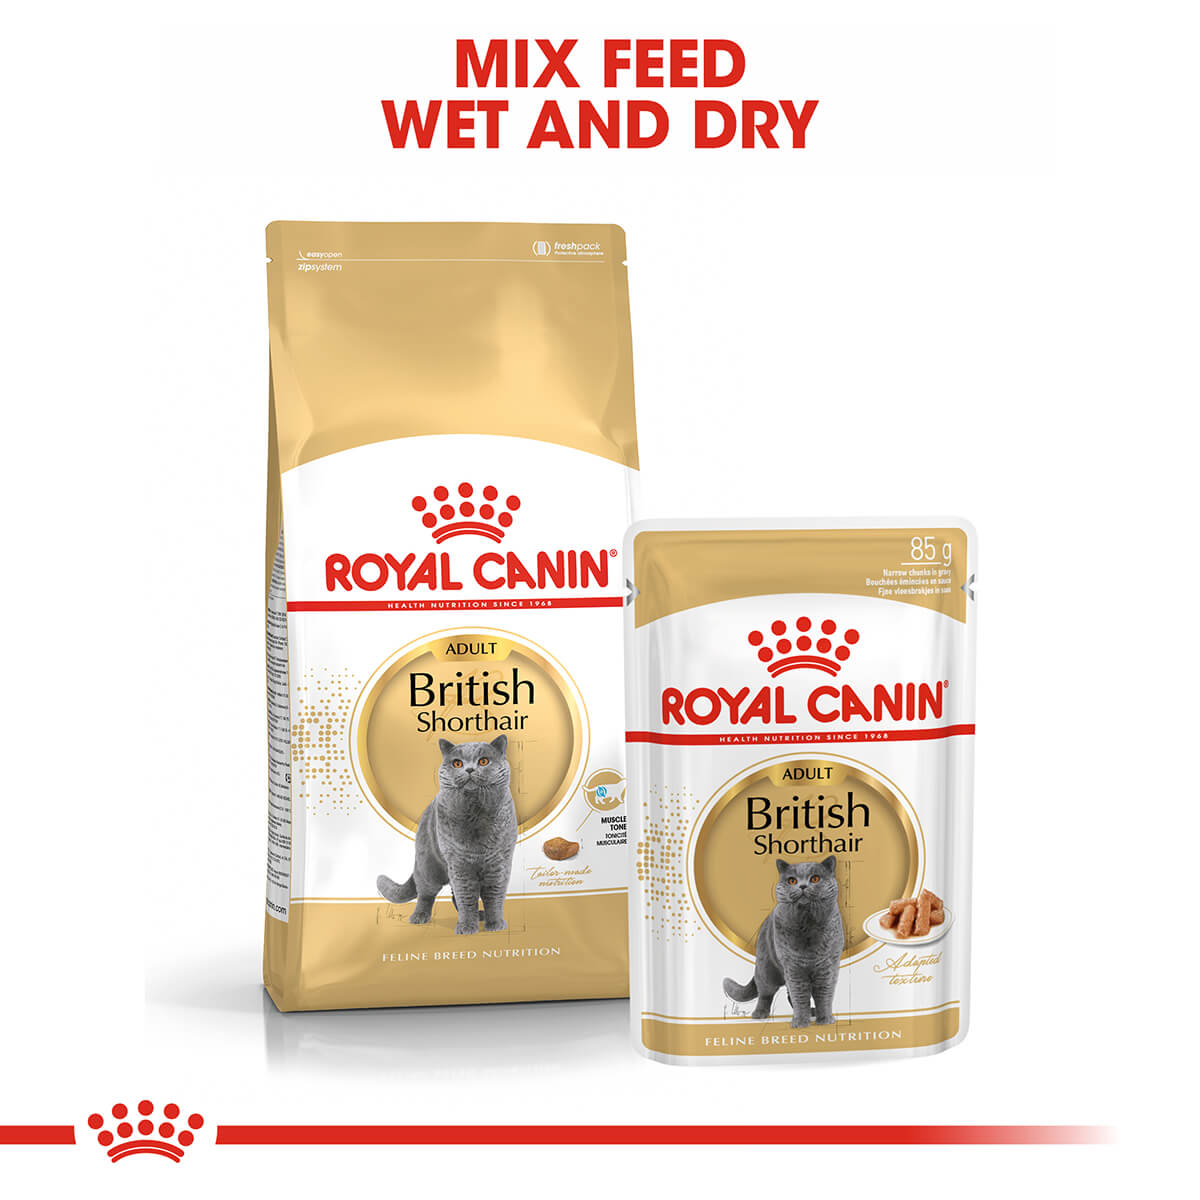 Royal Canin British Shorthair Adult In Gravy Wet Cat Food 85G